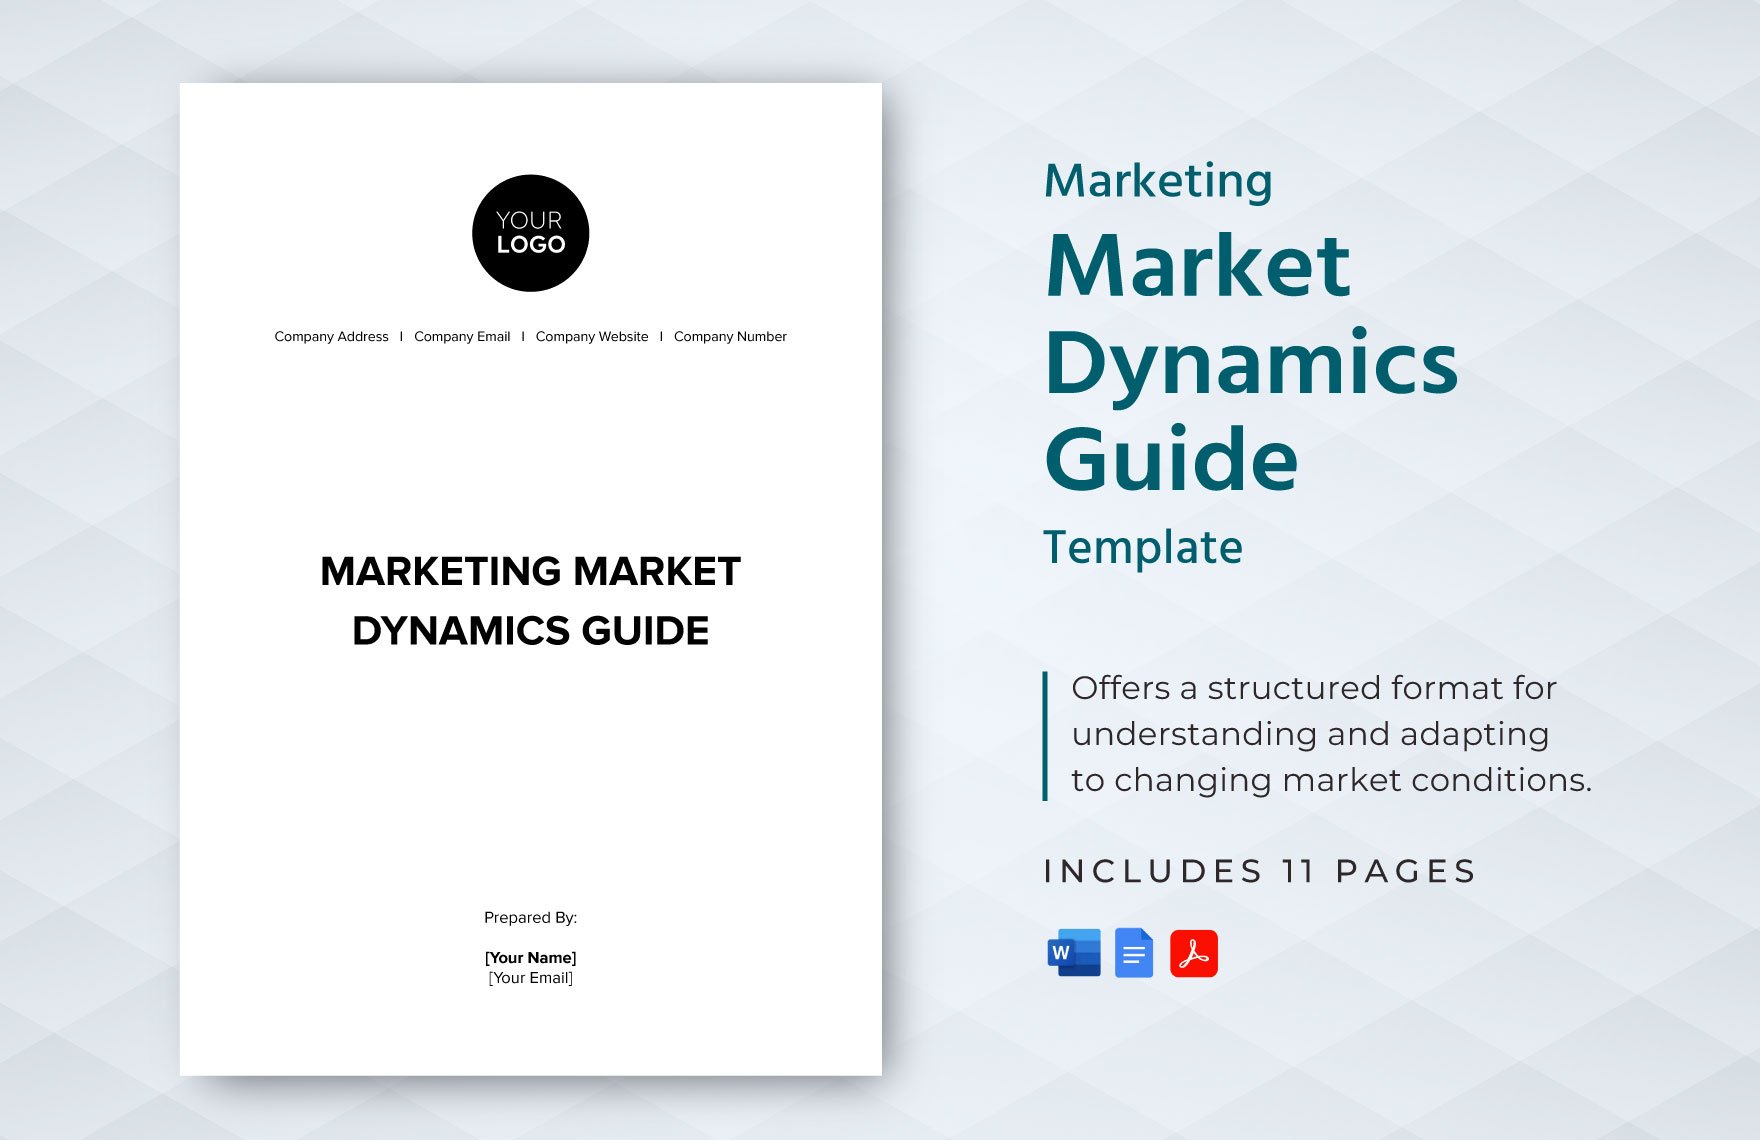 Marketing Market Dynamics Guide Template